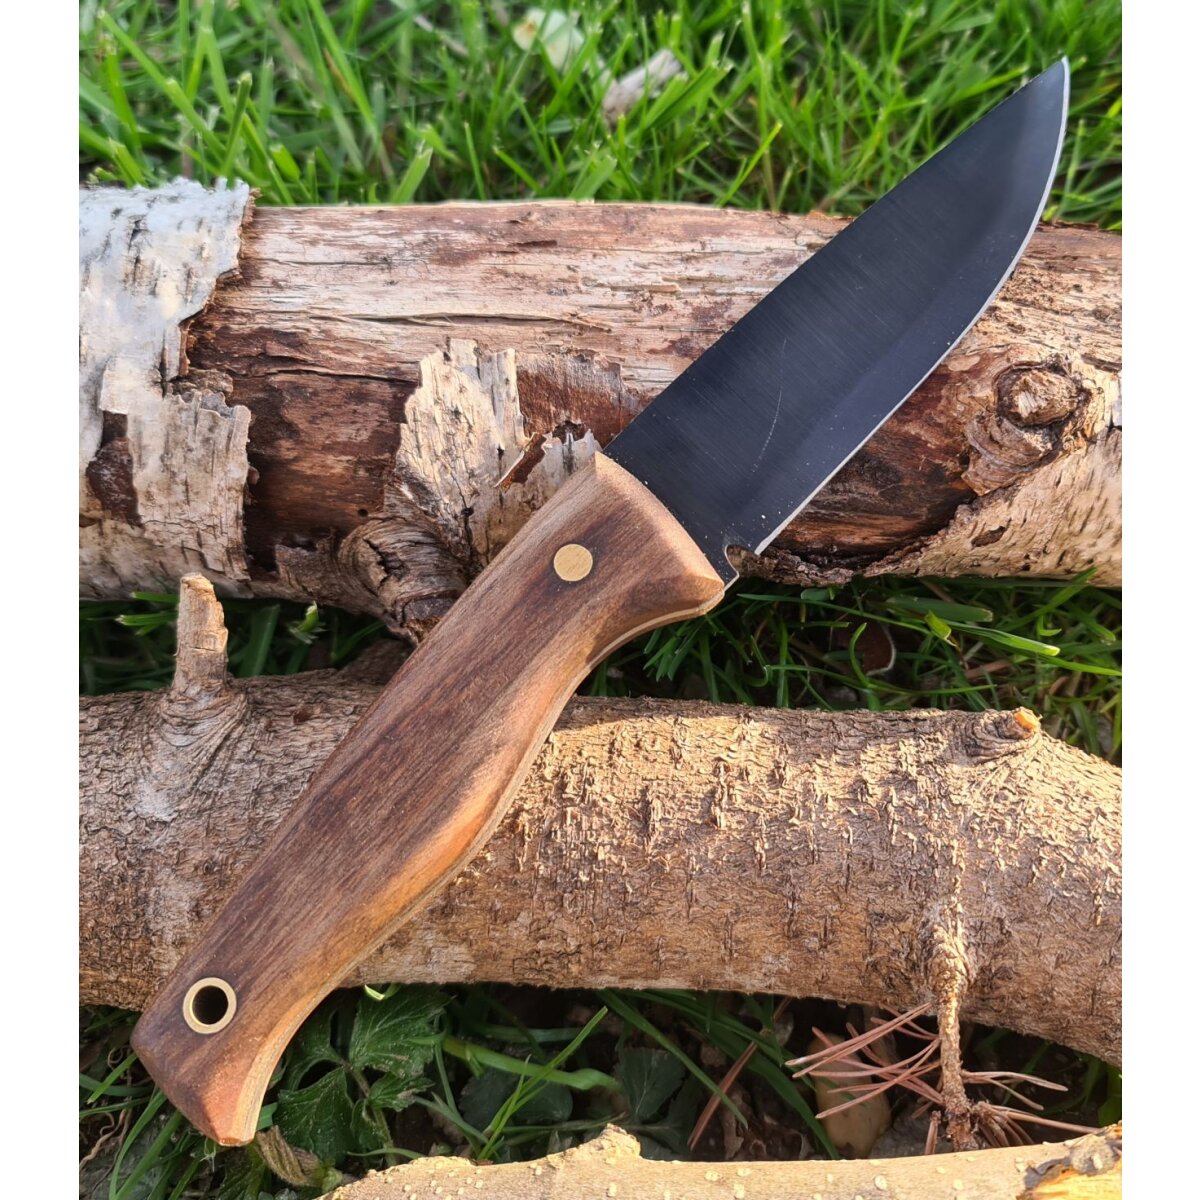 BeaverCraft Bushcraft Knife BSH3 - The General Prepper